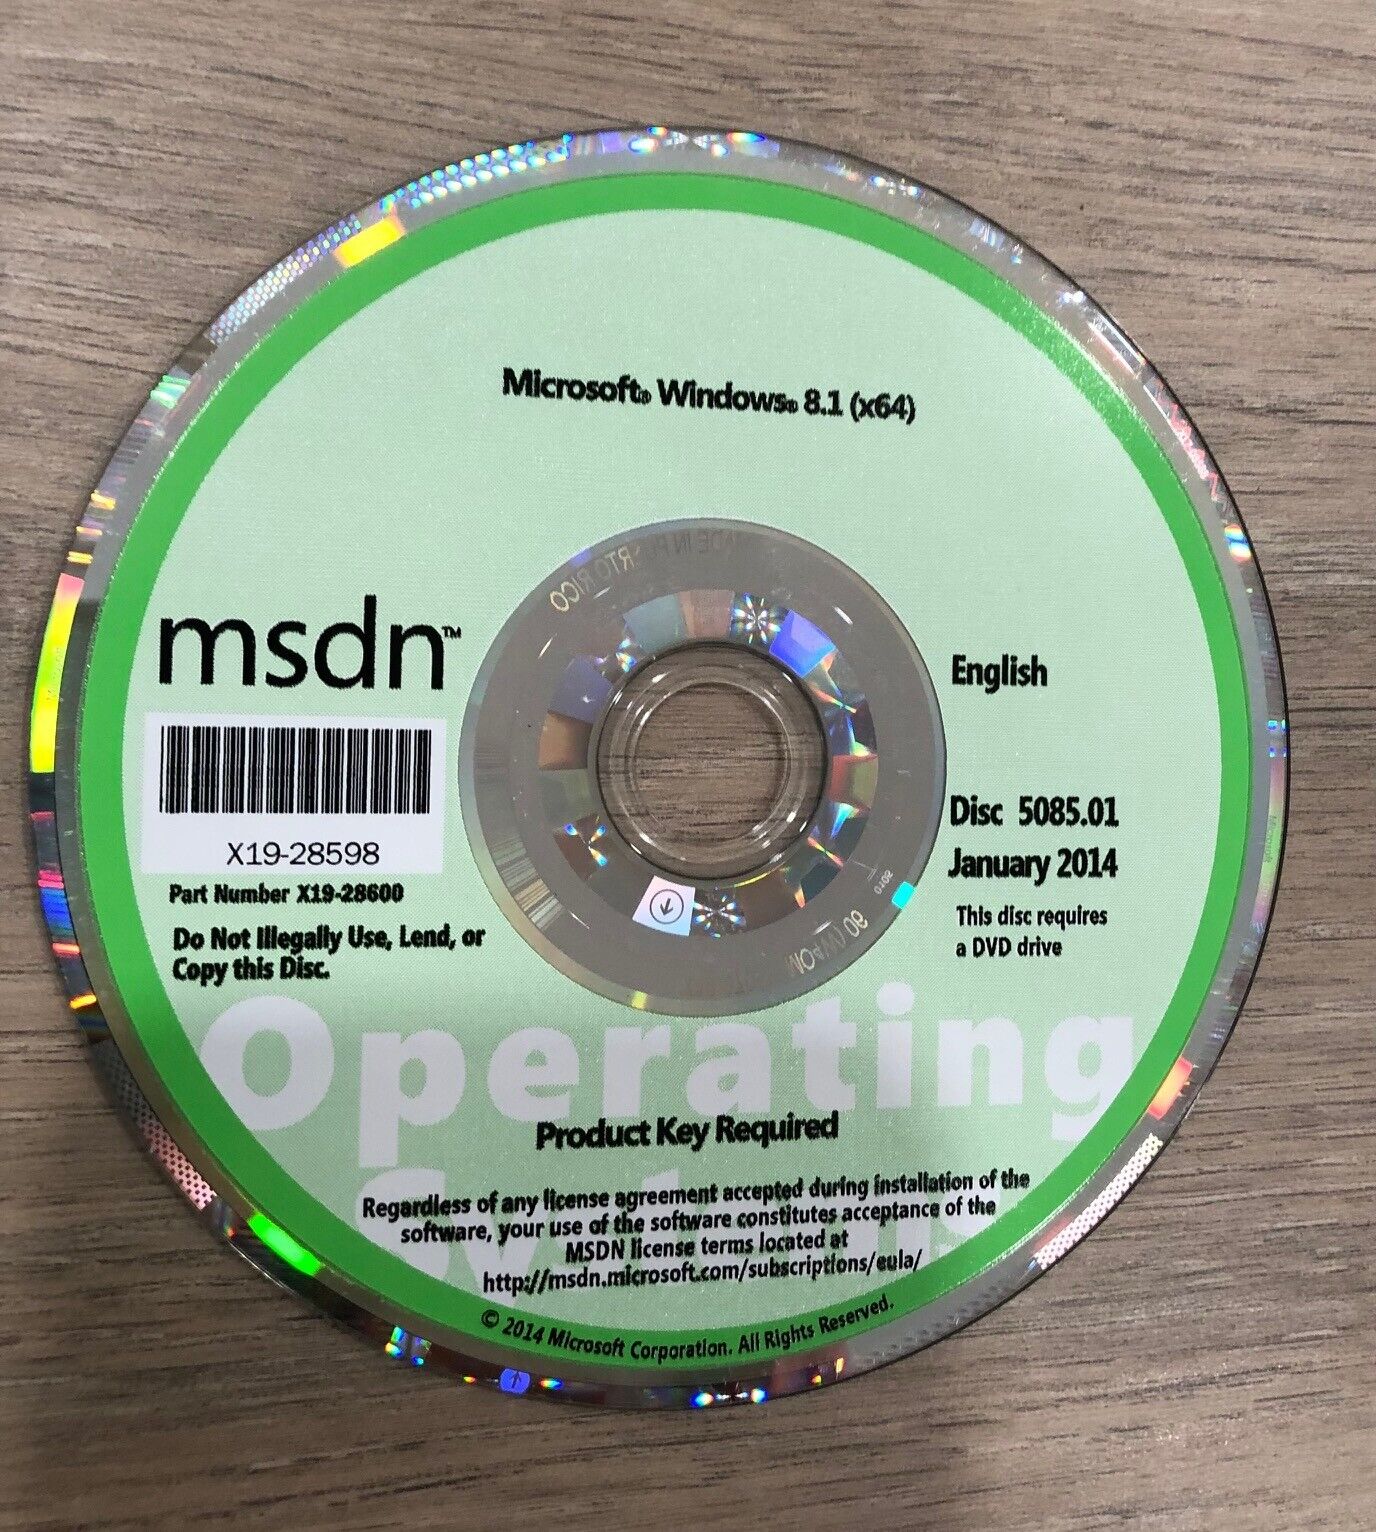 Microsoft MSDN Windows 8.1 X64 Disc 5085.01 January 2014 English DVD - No Key